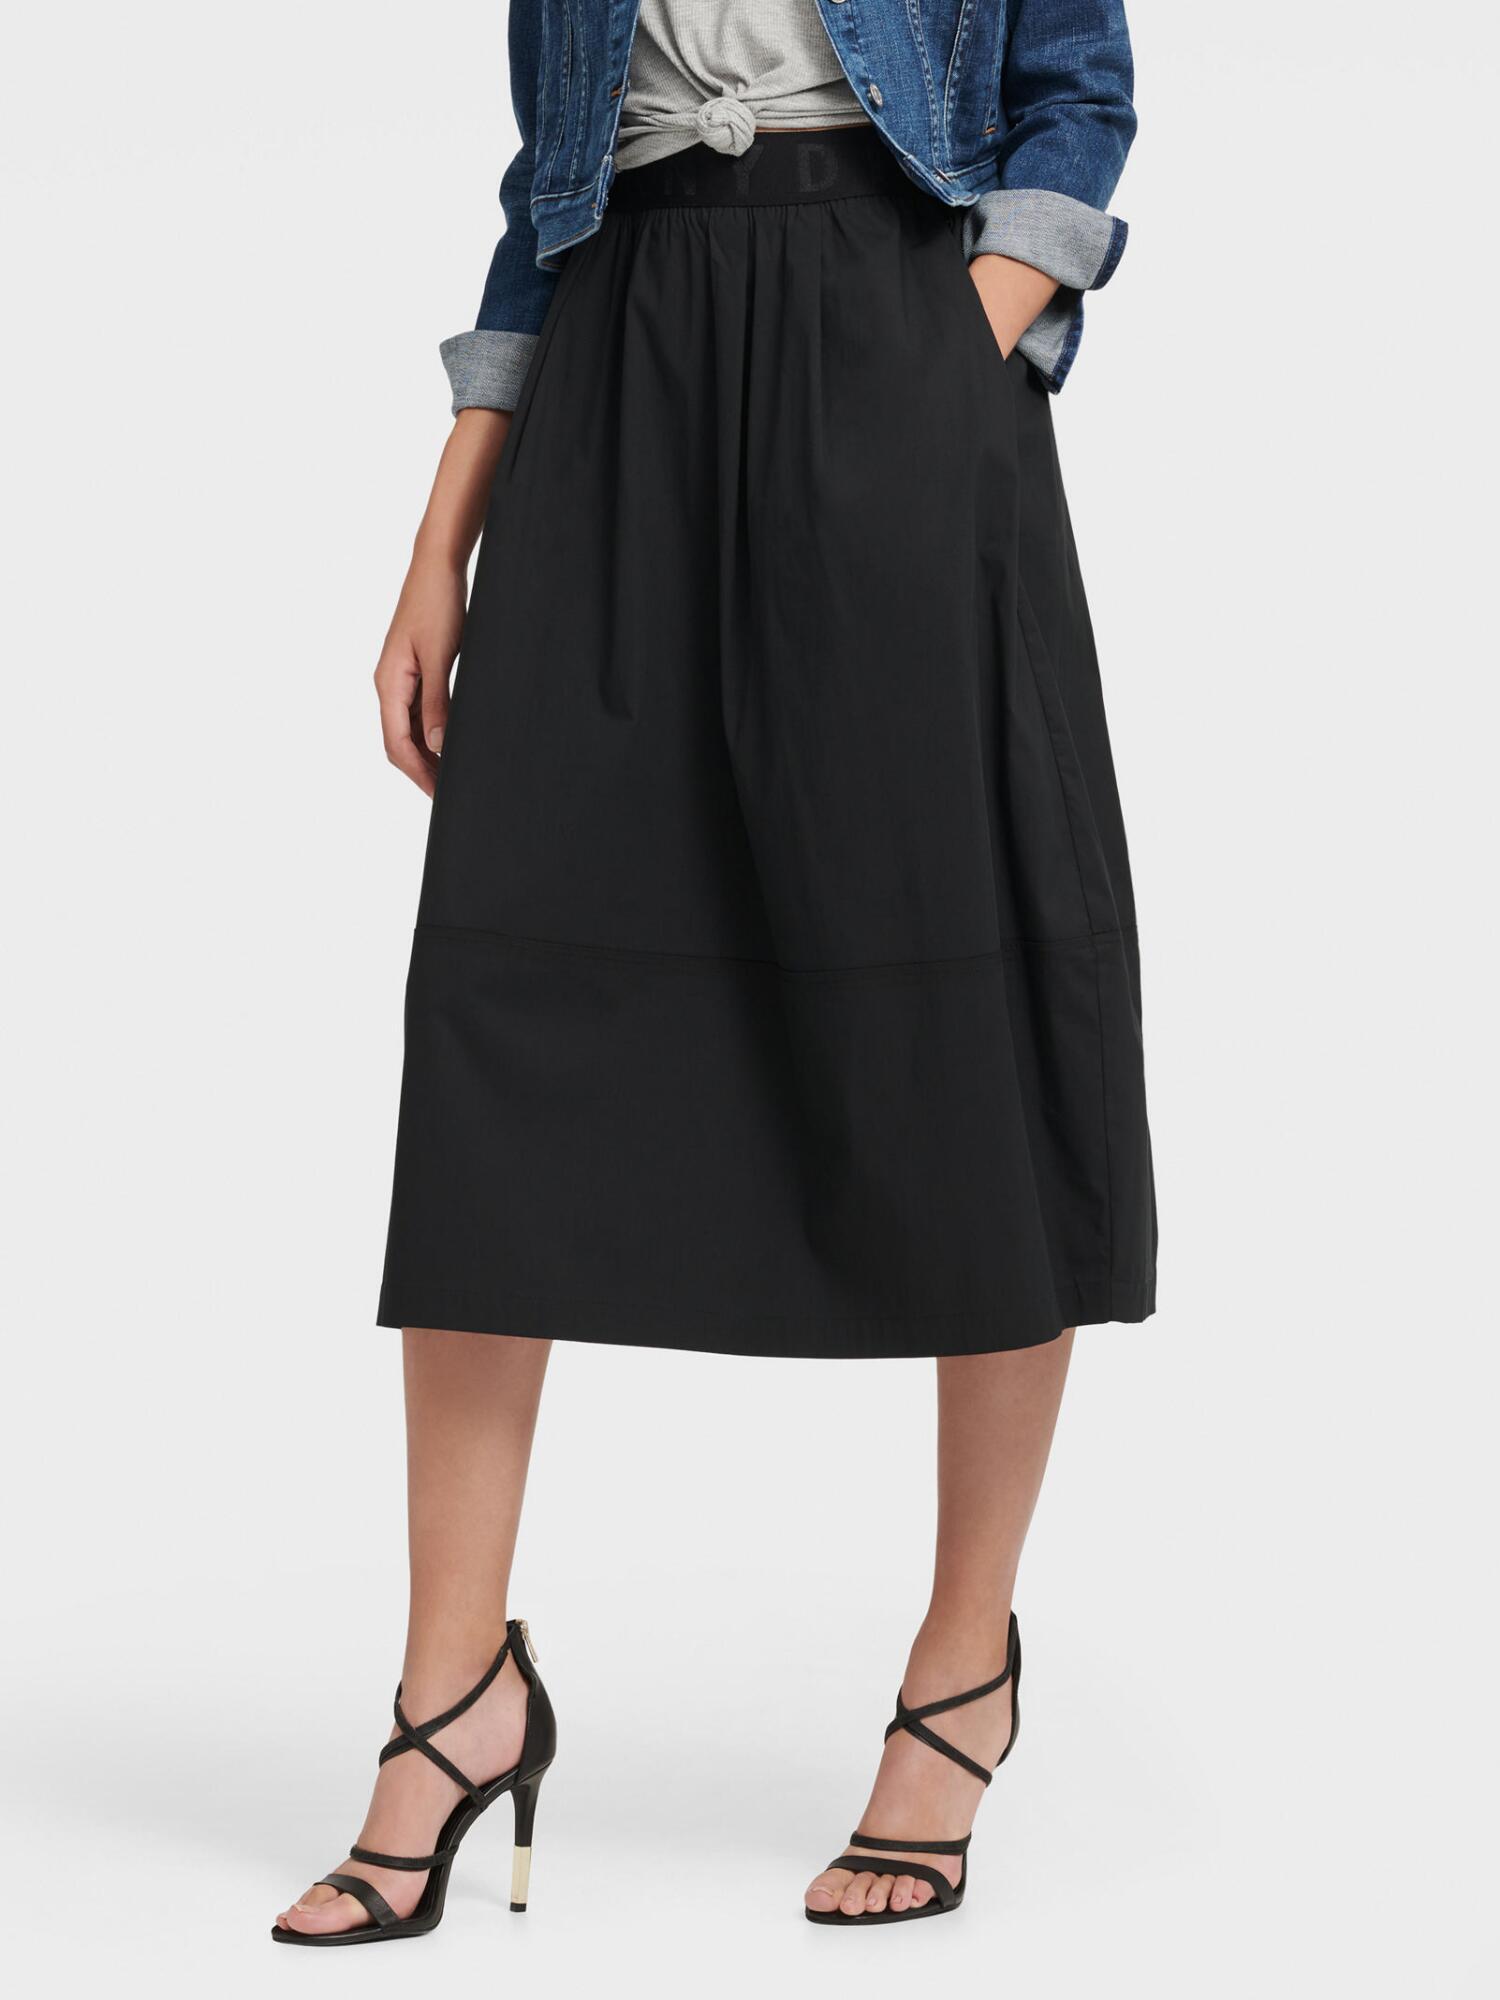 DKNY Cotton Pull-on Midi Skirt in Black - Lyst